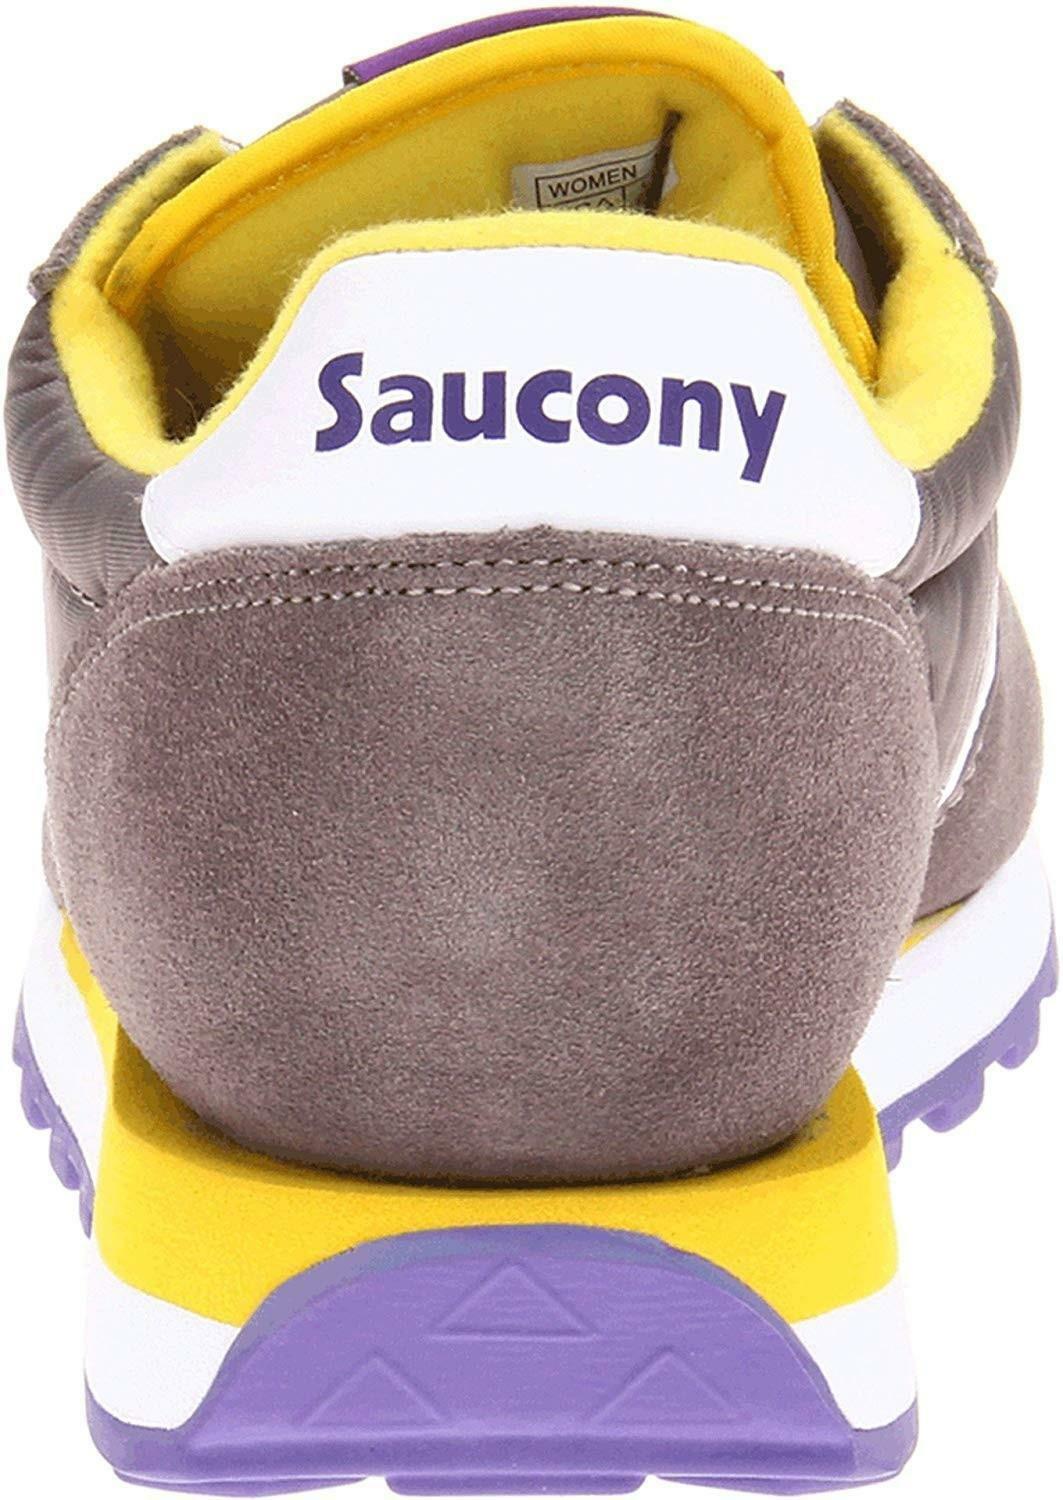 saucony saucony jazz original scarpe sportive donna grigie 1044279